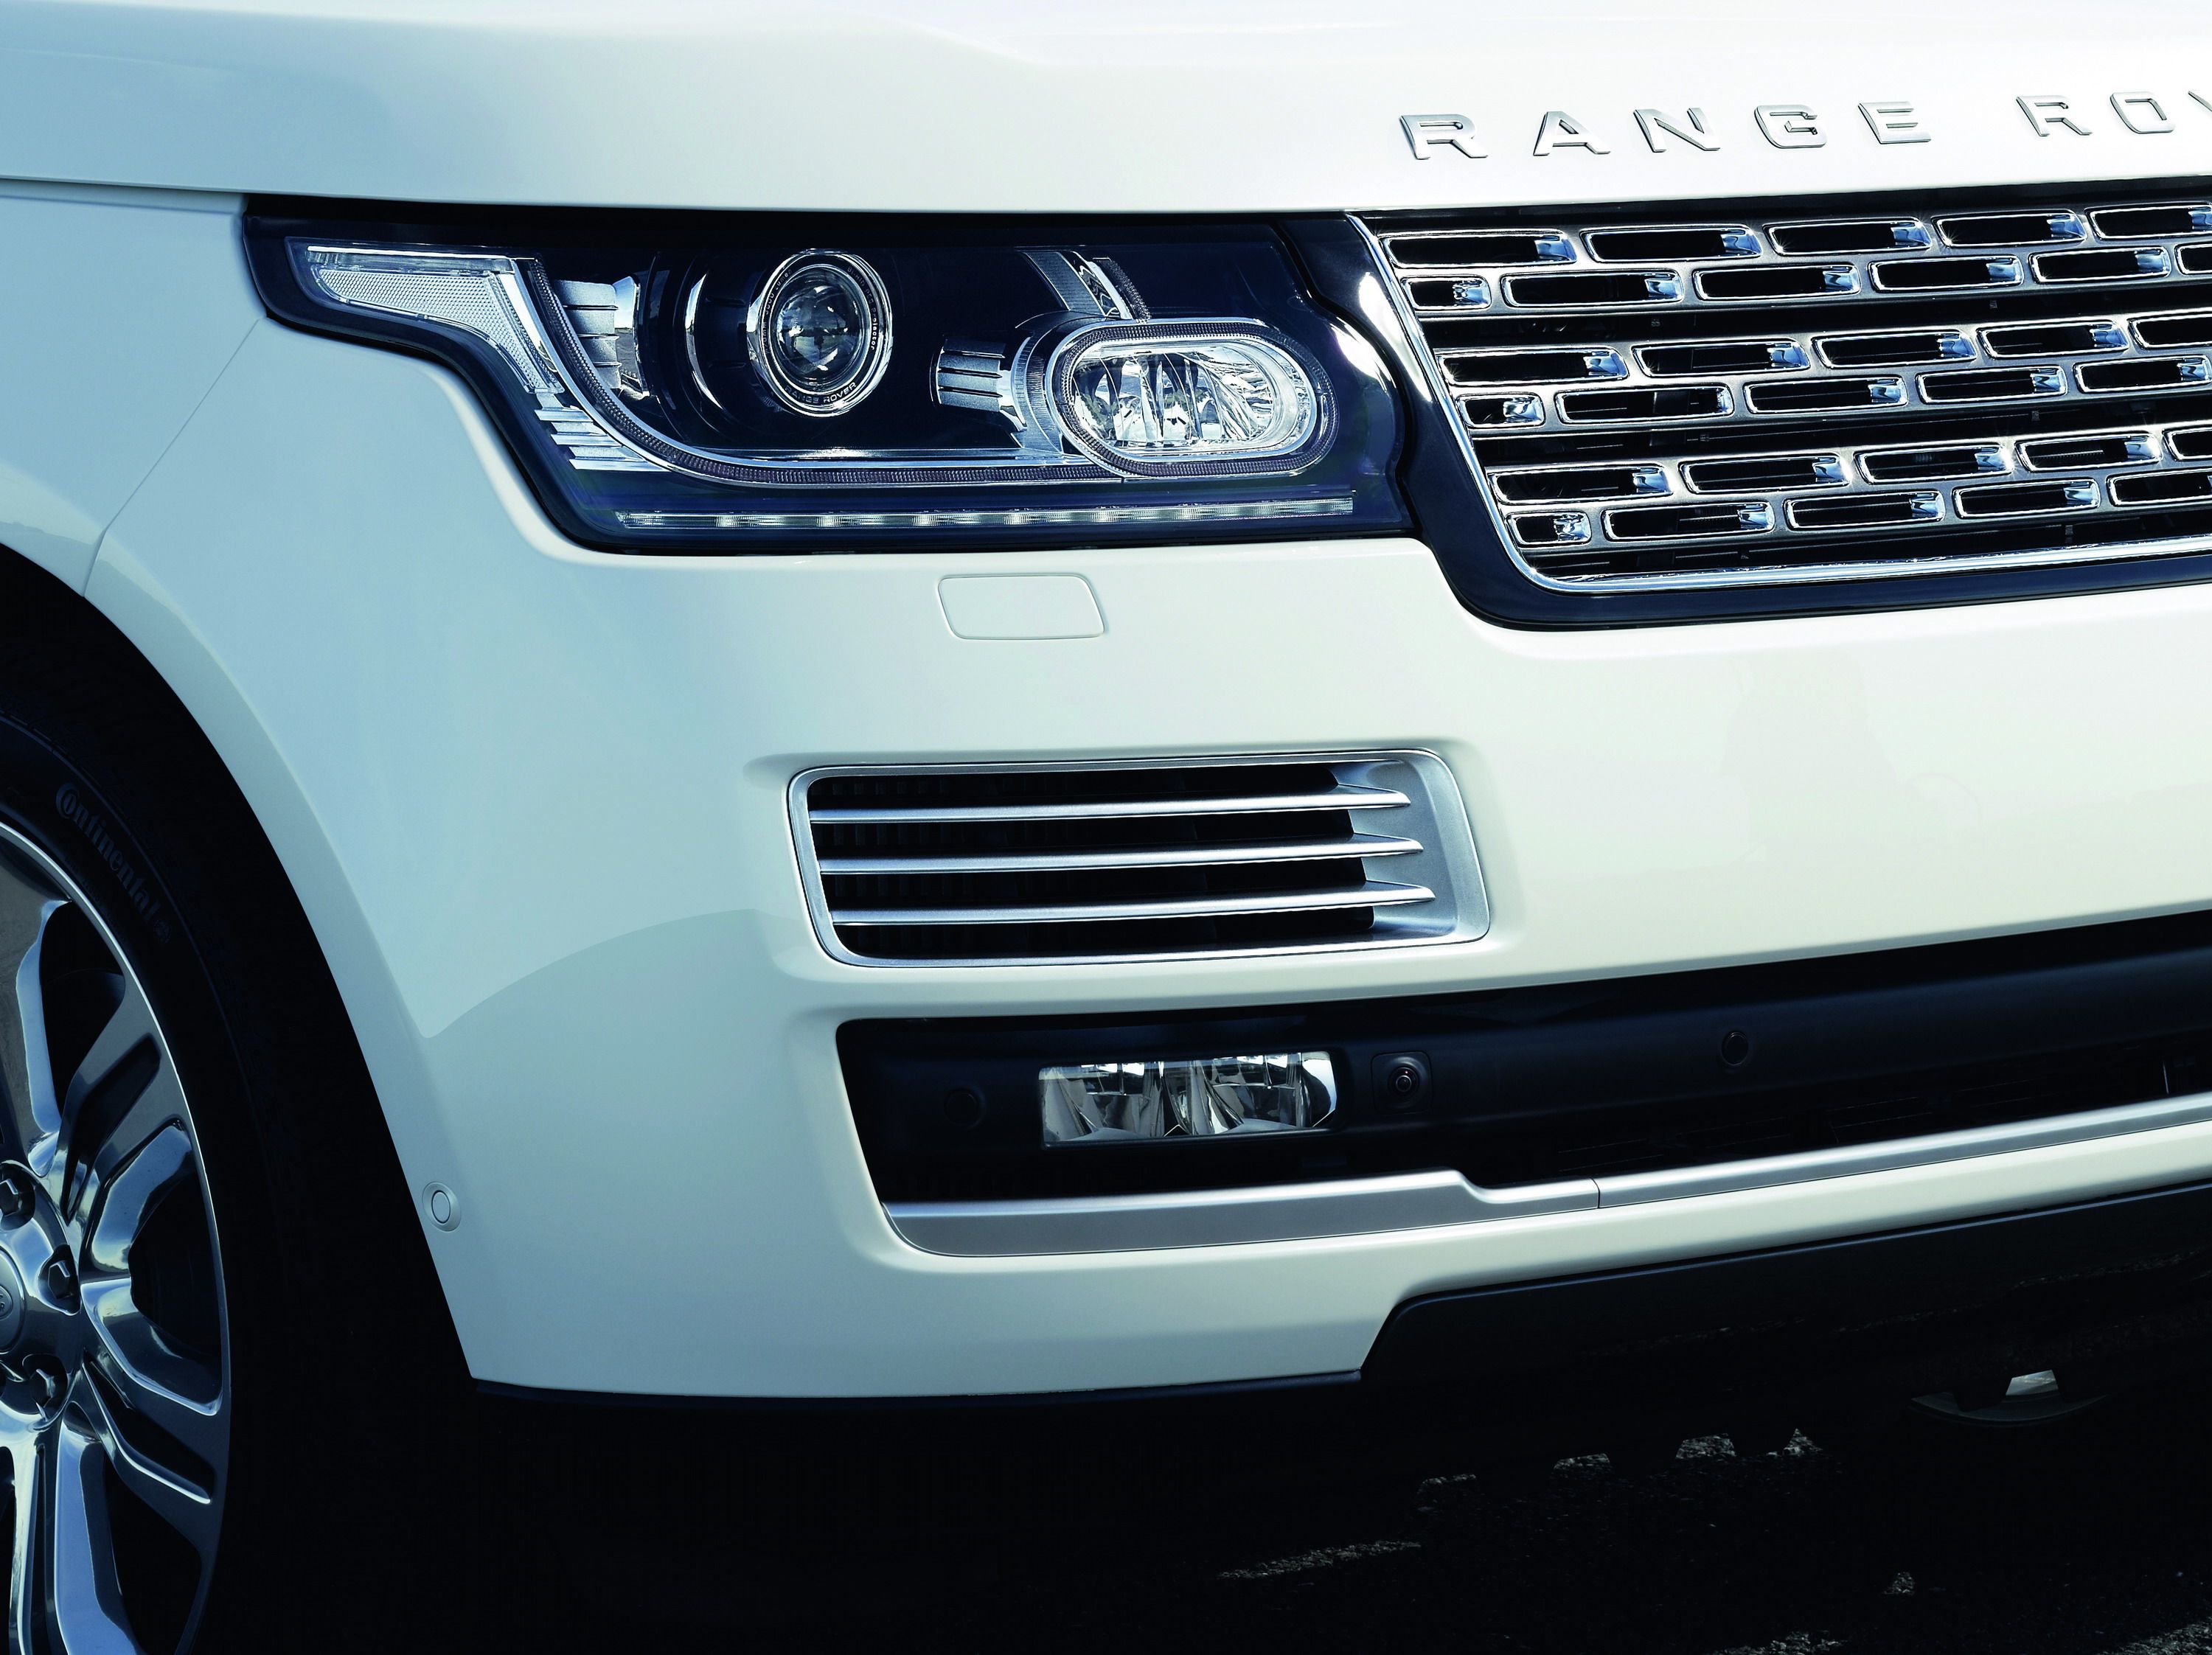 2014 Land Rover Range Rover Autobiography Black